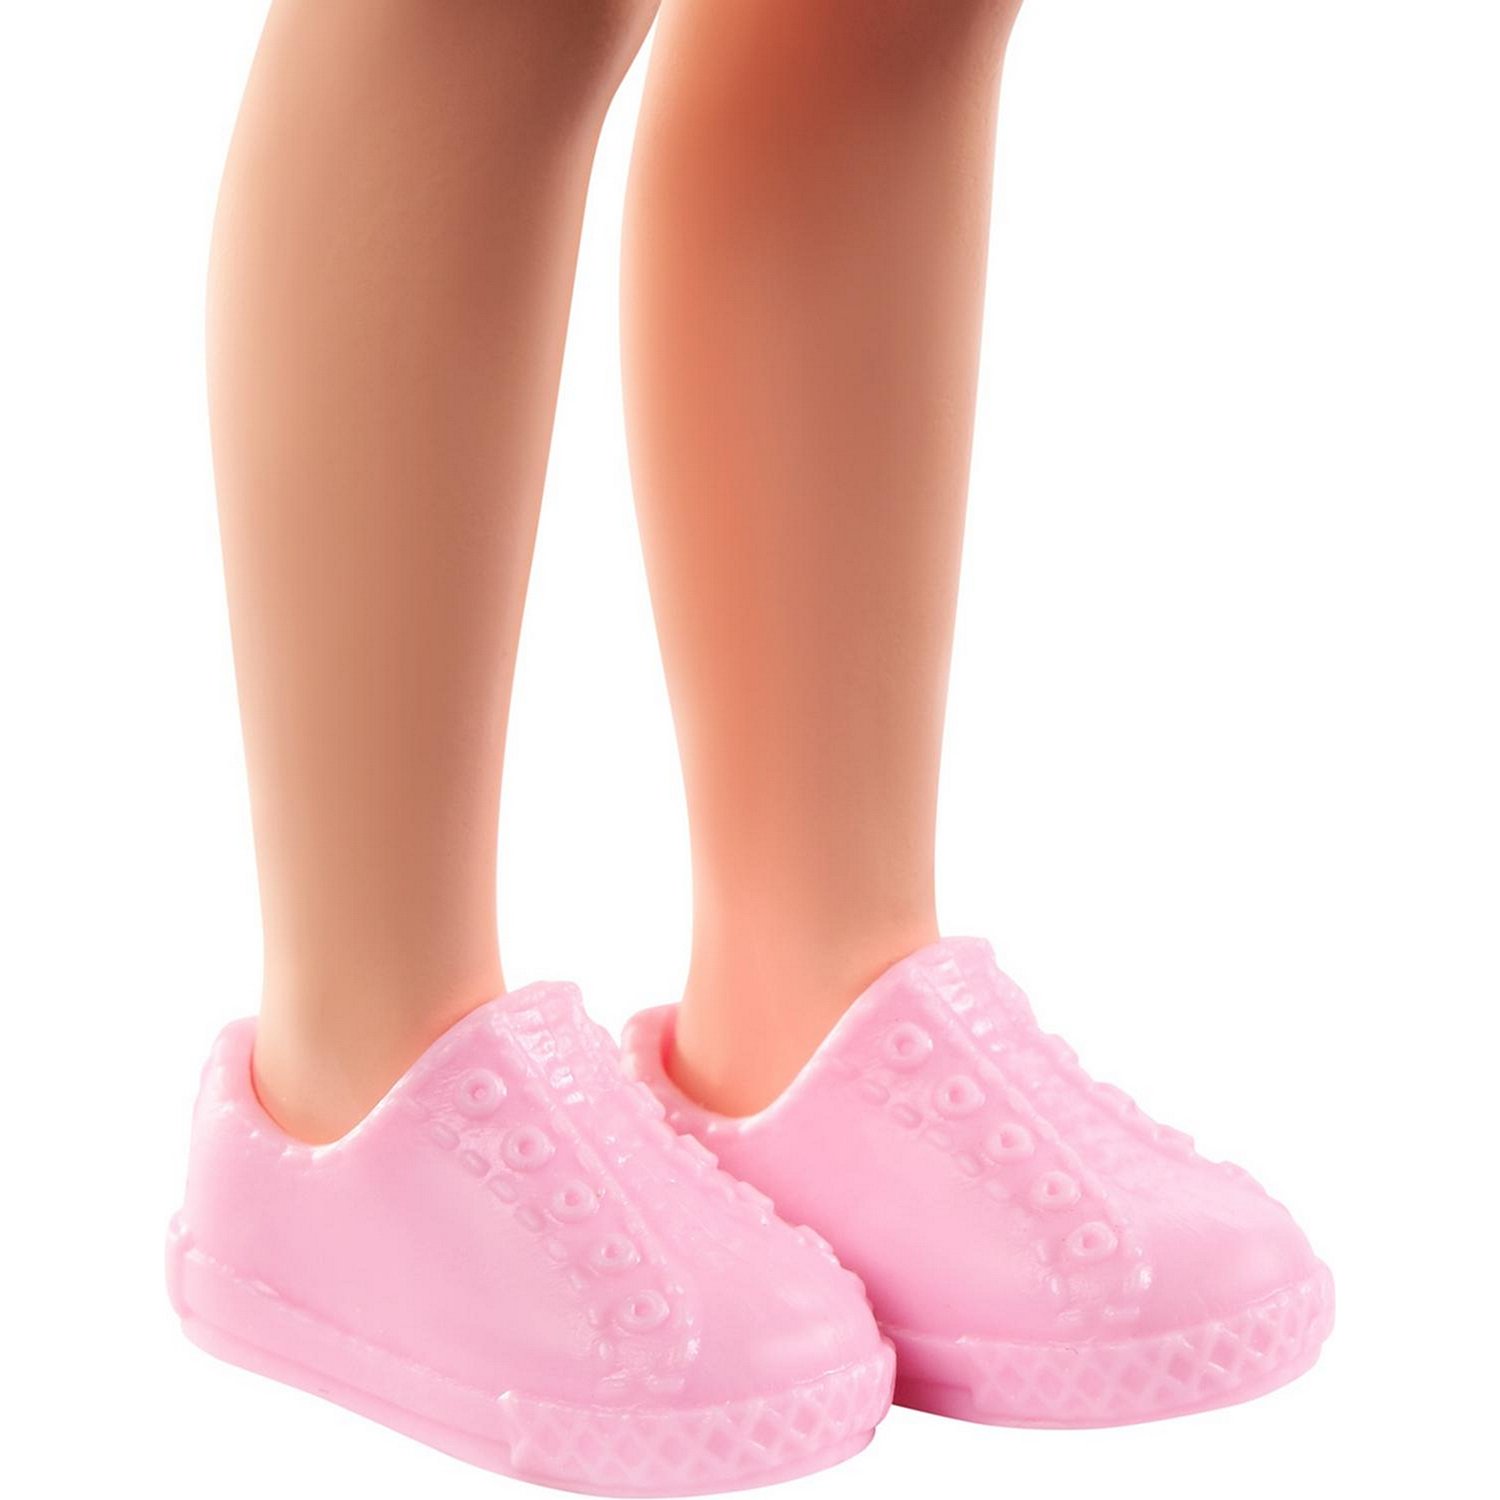 Набор Barbie Карьера Челси Доктор кукла+аксессуары GTN88